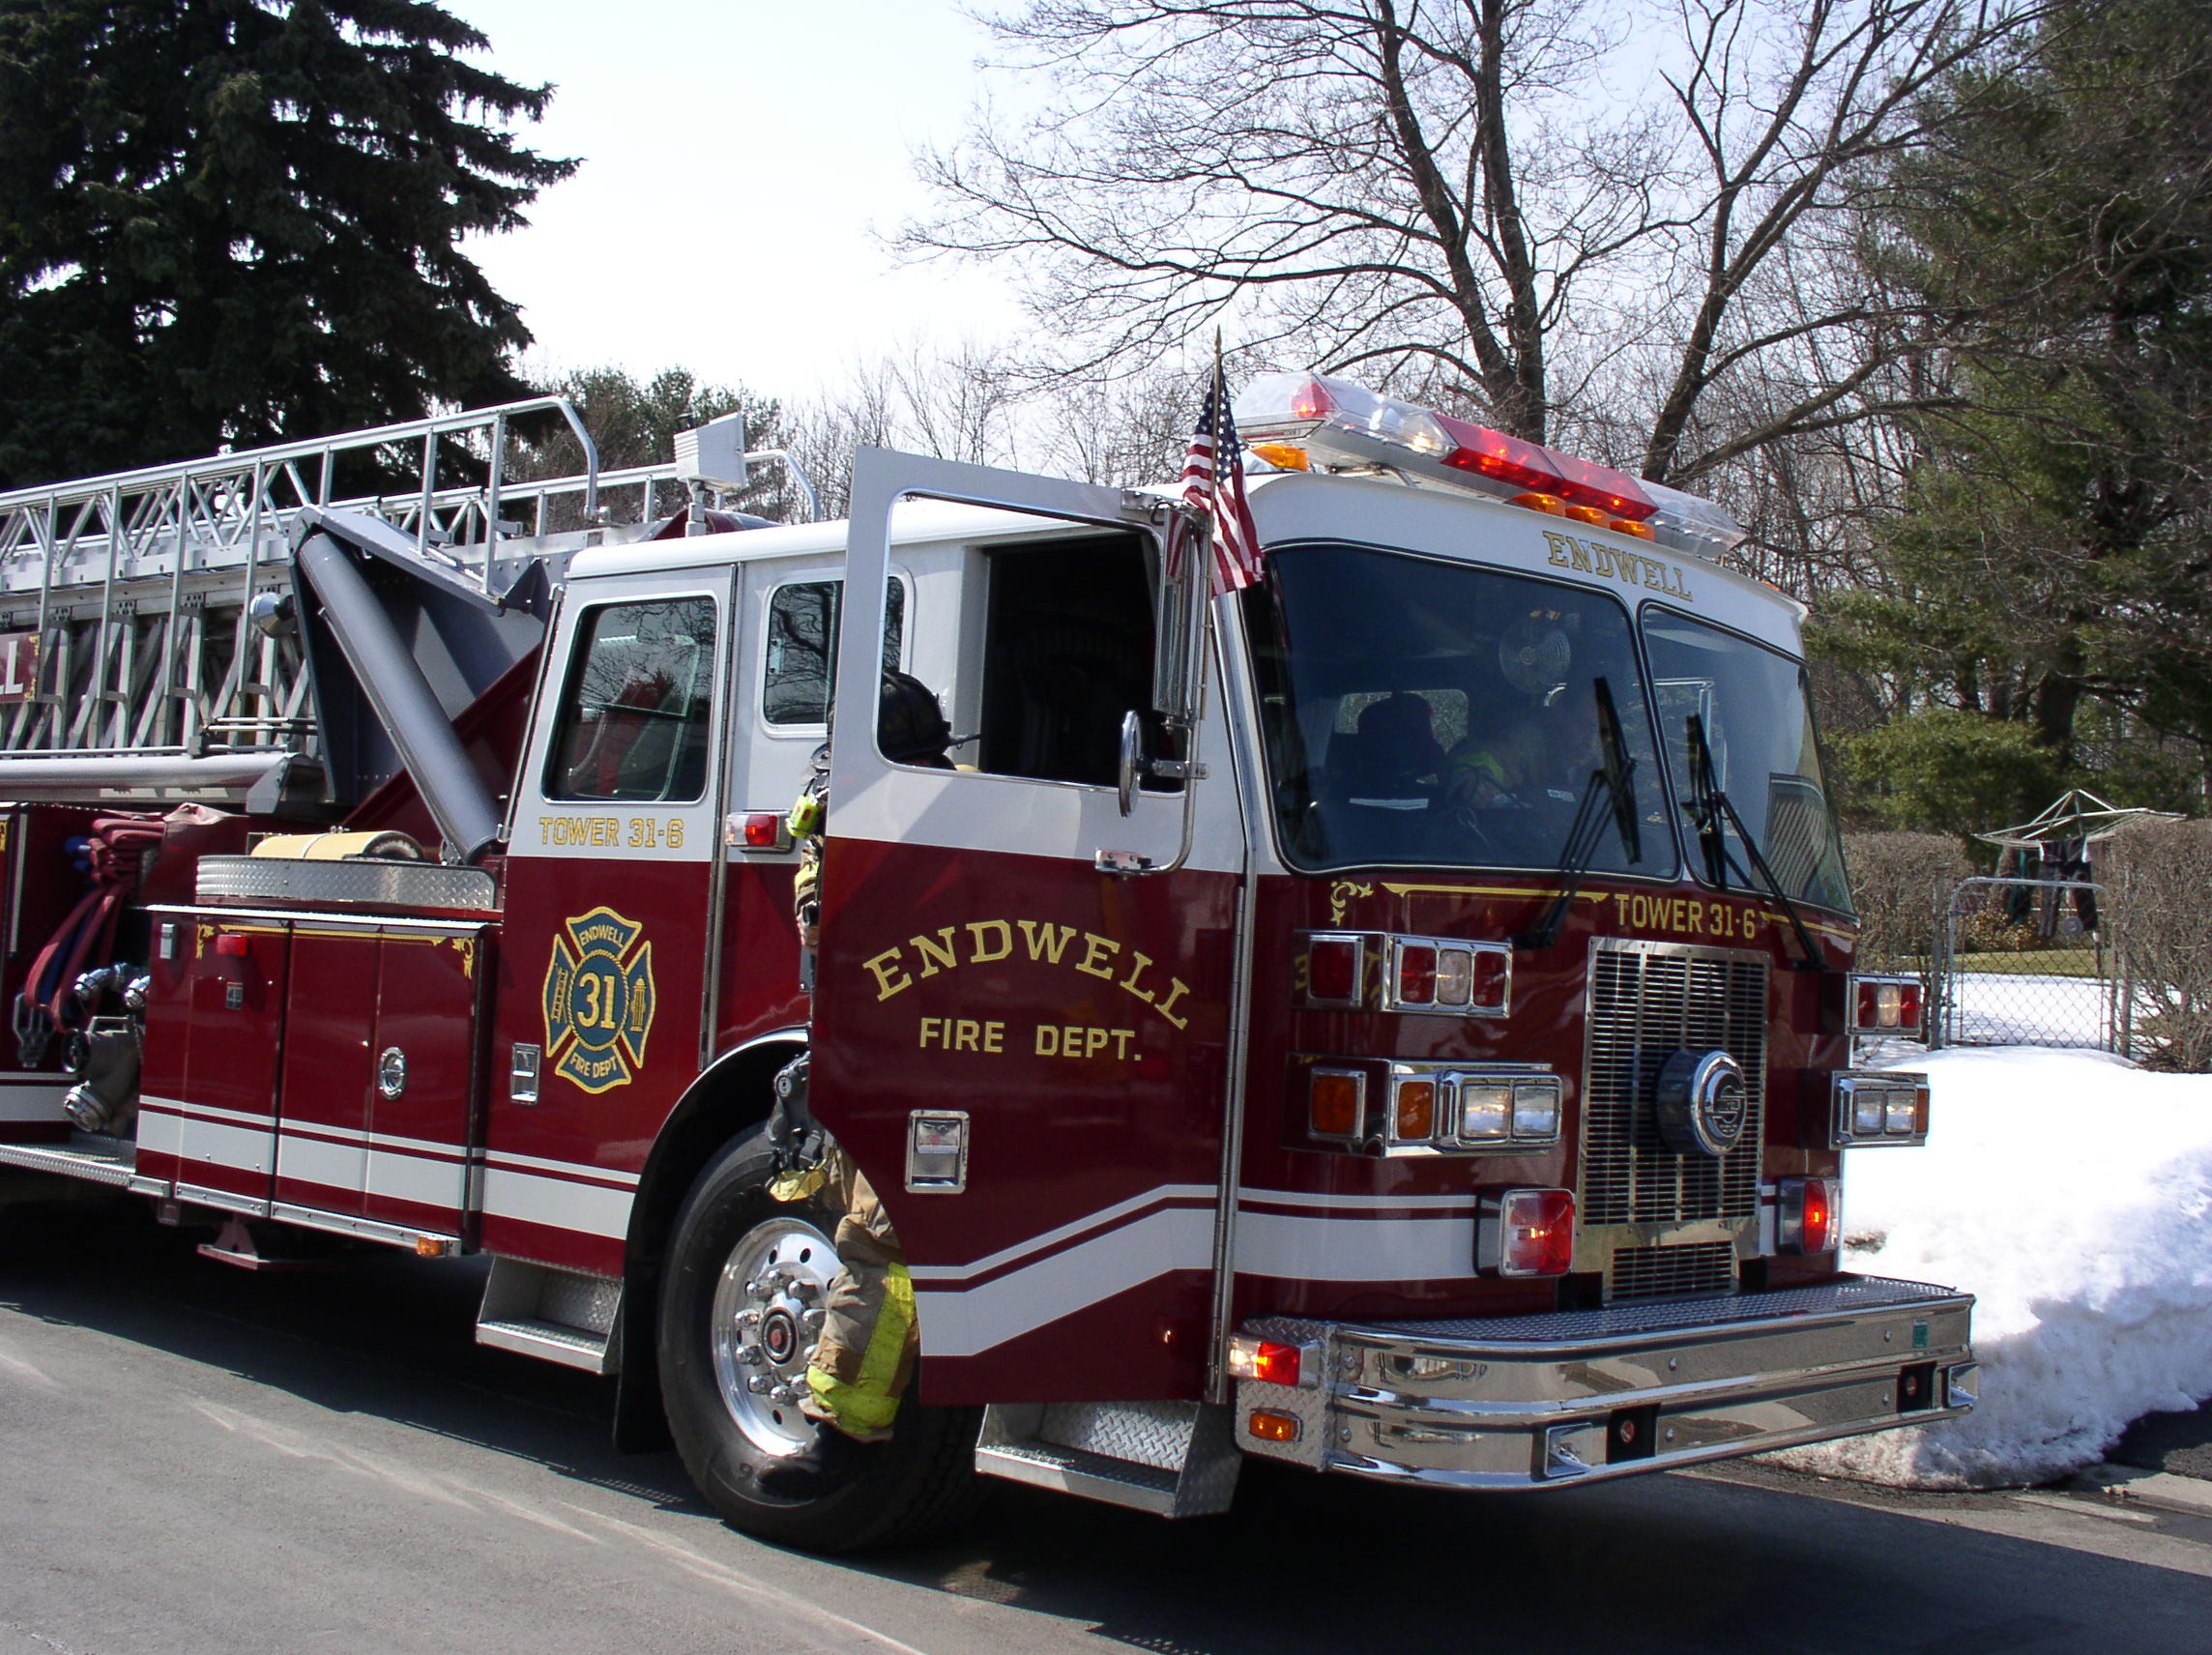 03-29-05  Response - Overheated Motor, 718 Stonefield Rd